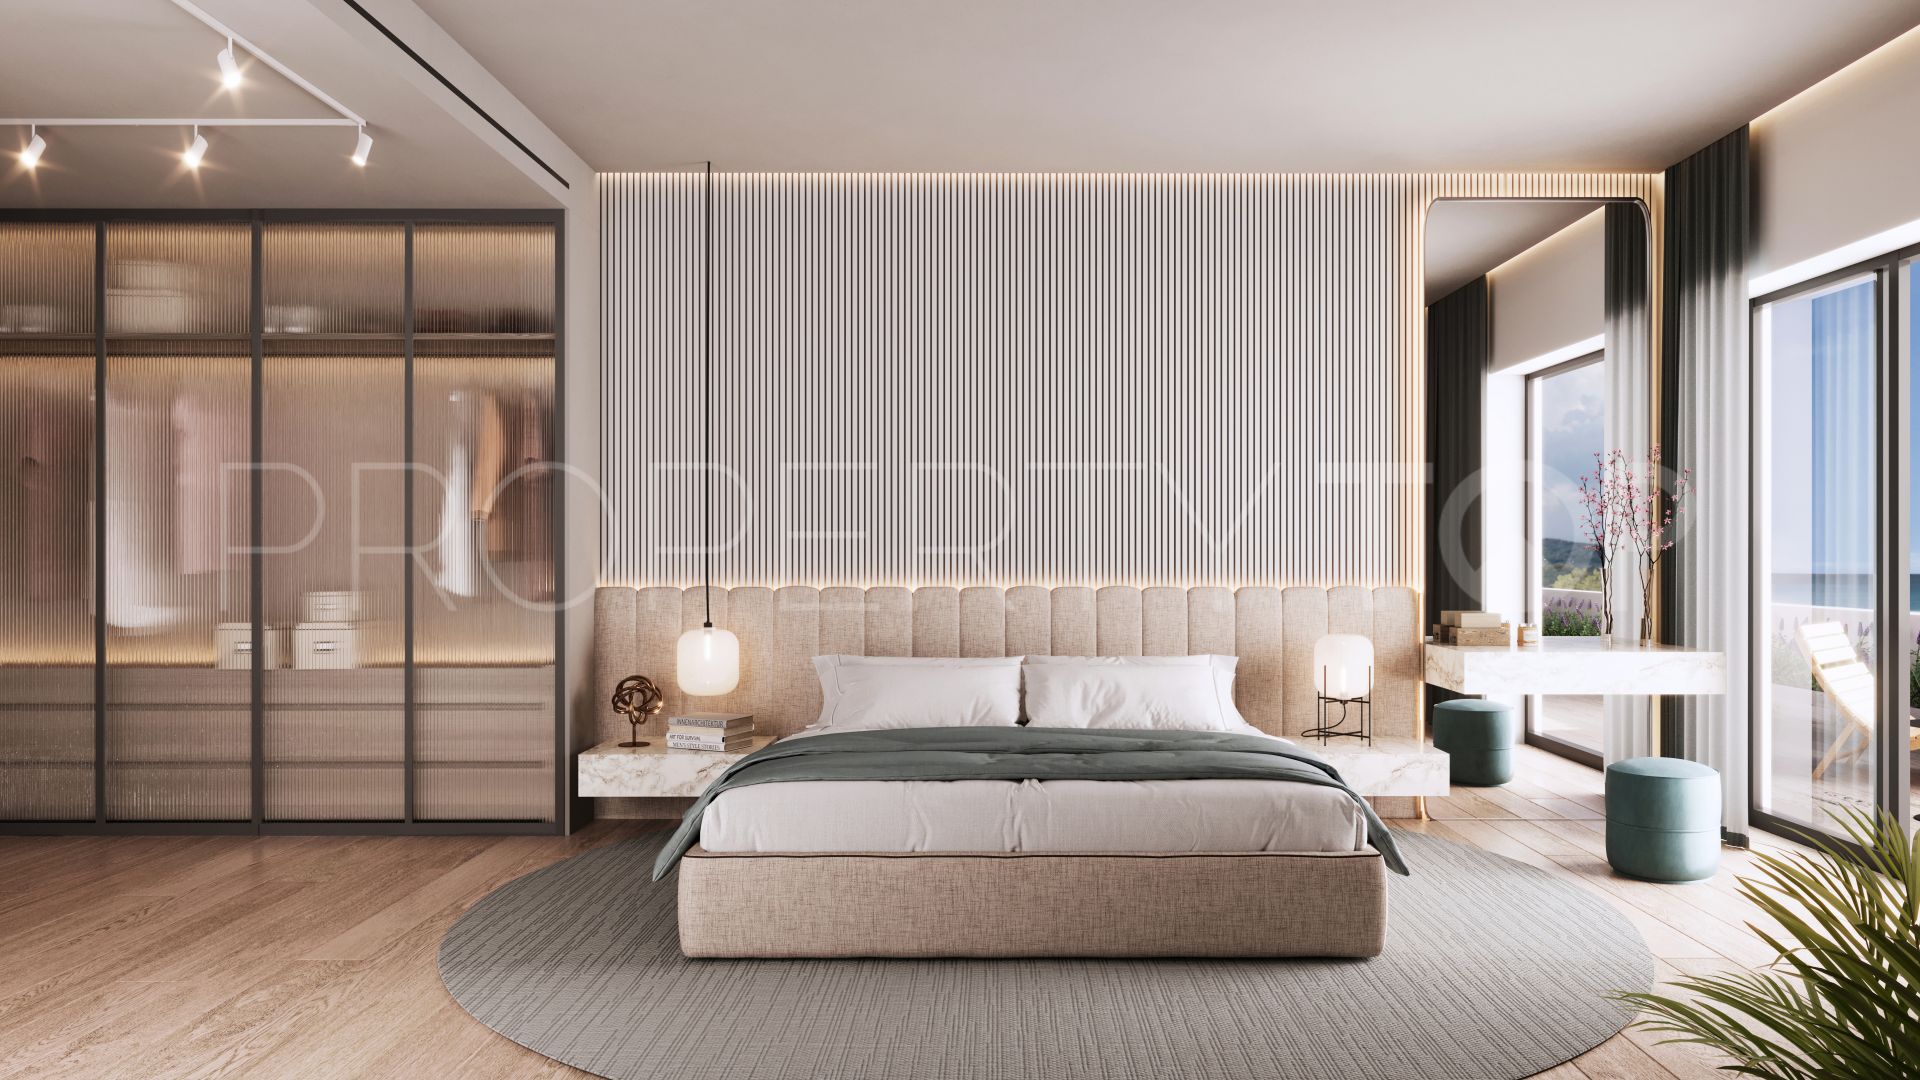 Buy 3 bedrooms penthouse in Marbella - Puerto Banus